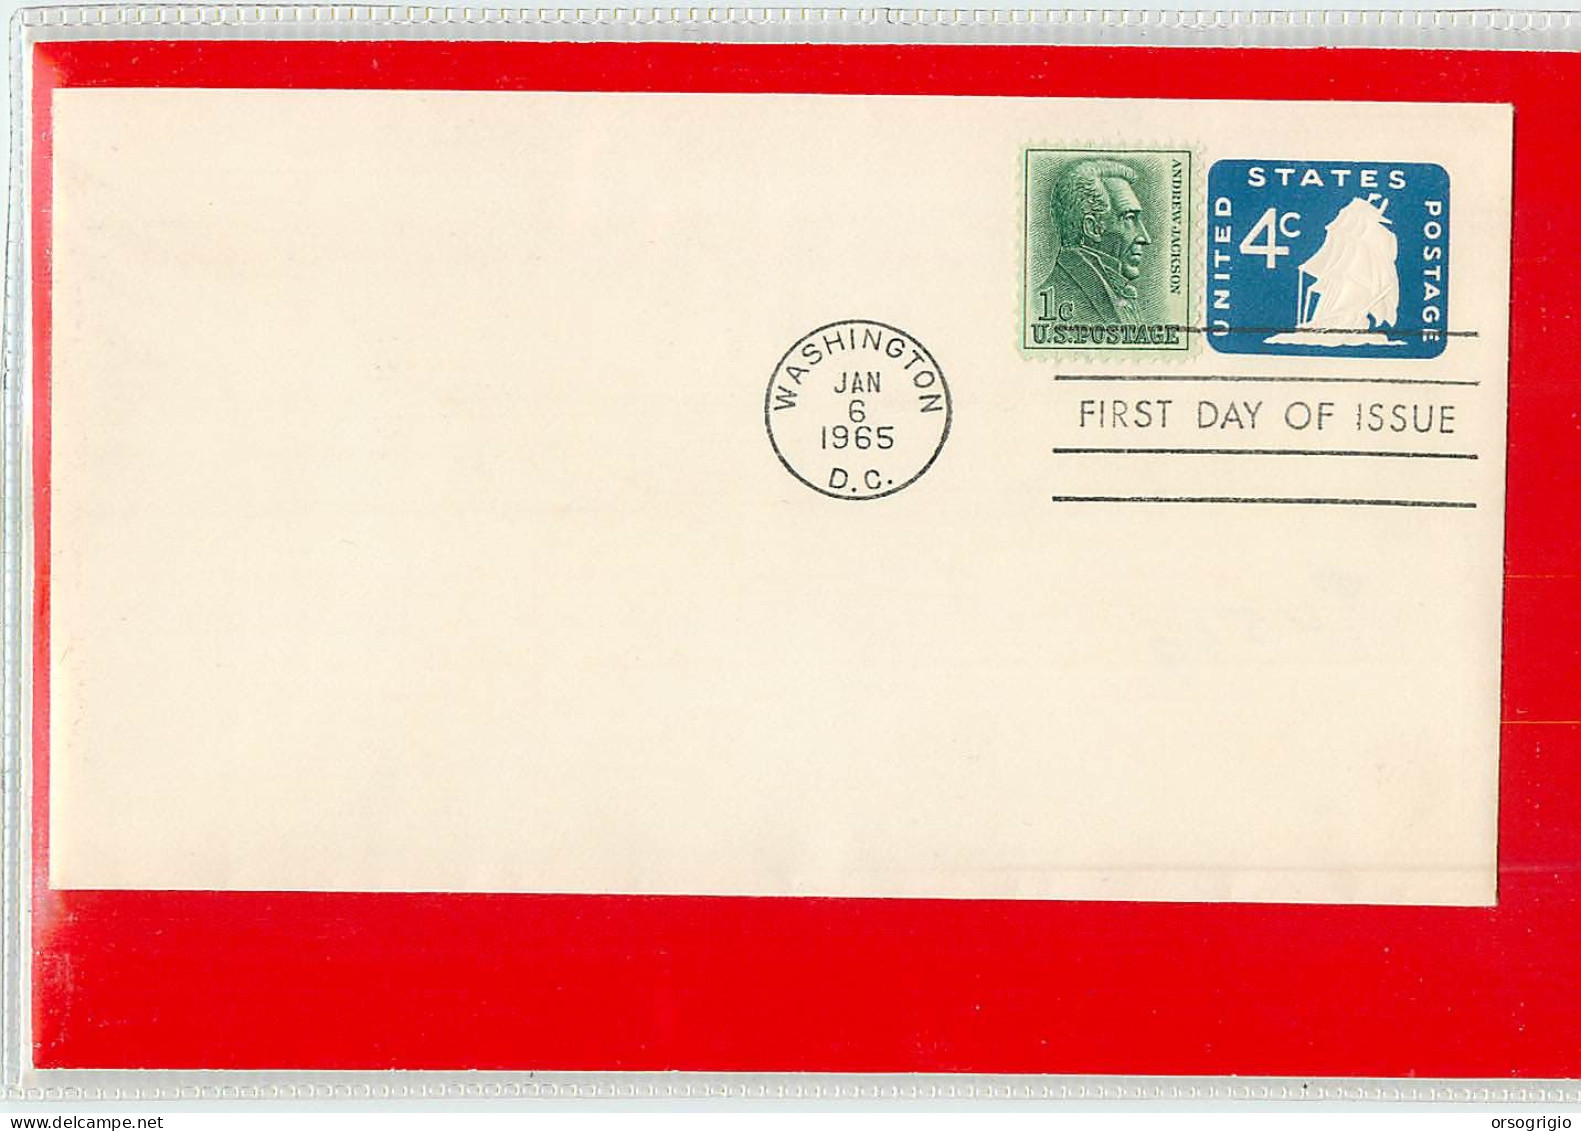 USA - EMBOSSED STAMPED ENVELOPE - FDC 1965  4c. - 1961-80